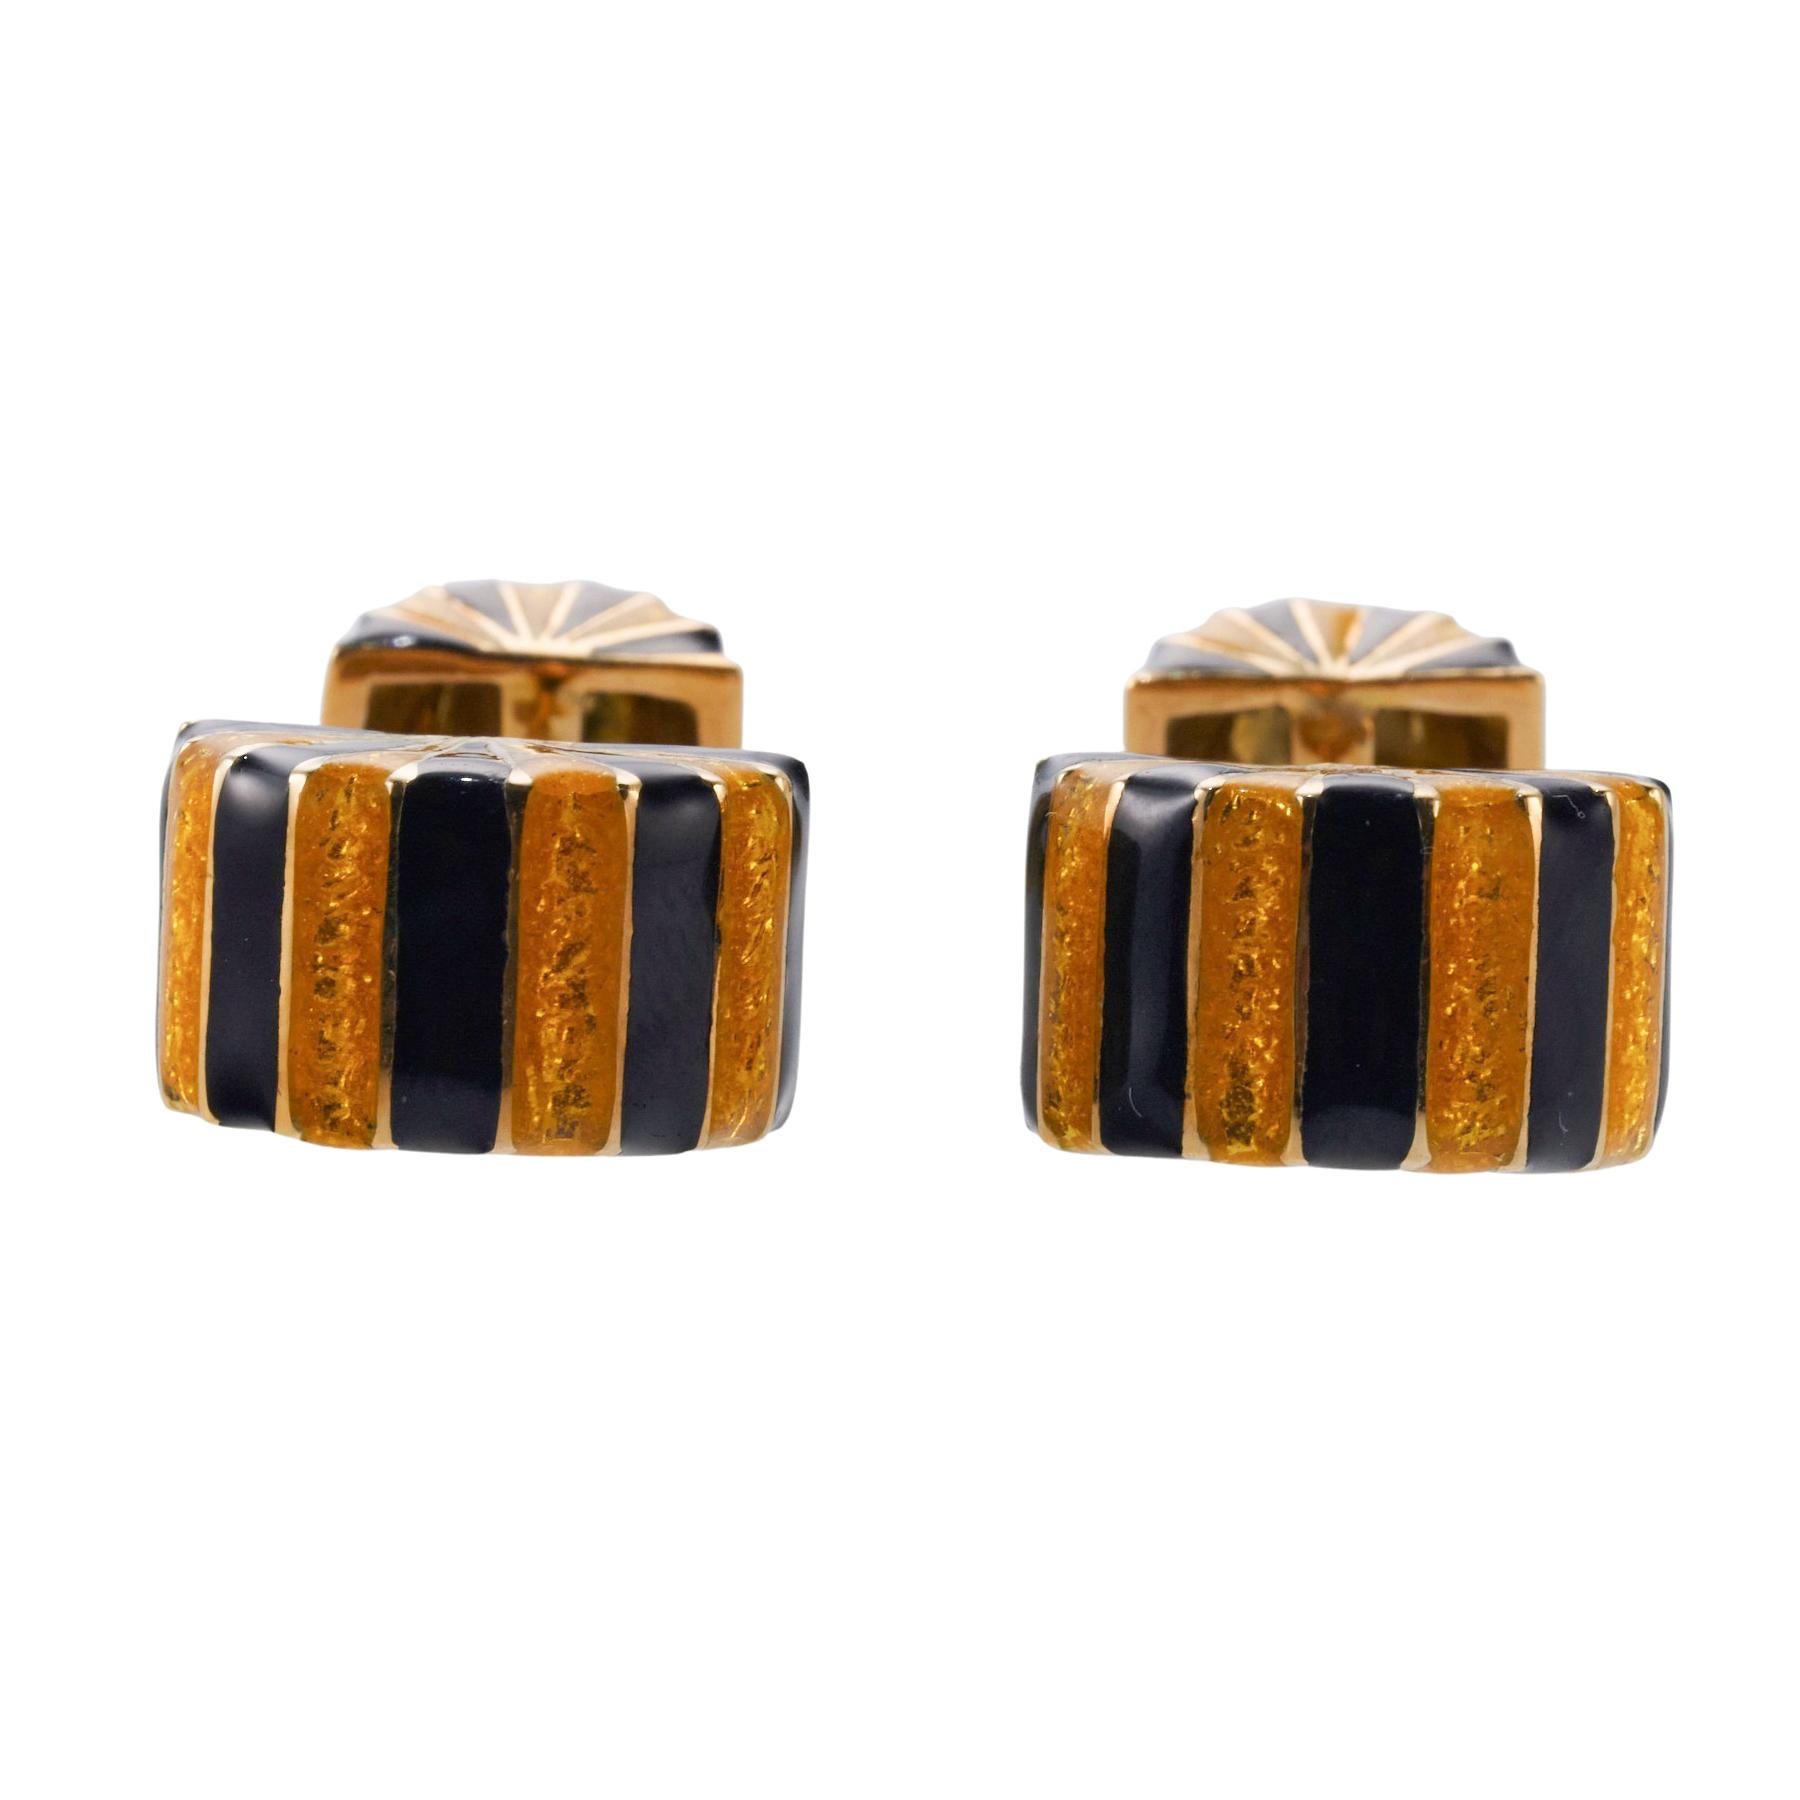 Pair of 18k gold striped enamel cufflinks by David Webb. Cufflink top measures 16mm x 10mm, back is 10mm x 8mm. Marked: David Webb, 18k, FS448. Weight is 17.3 grams.